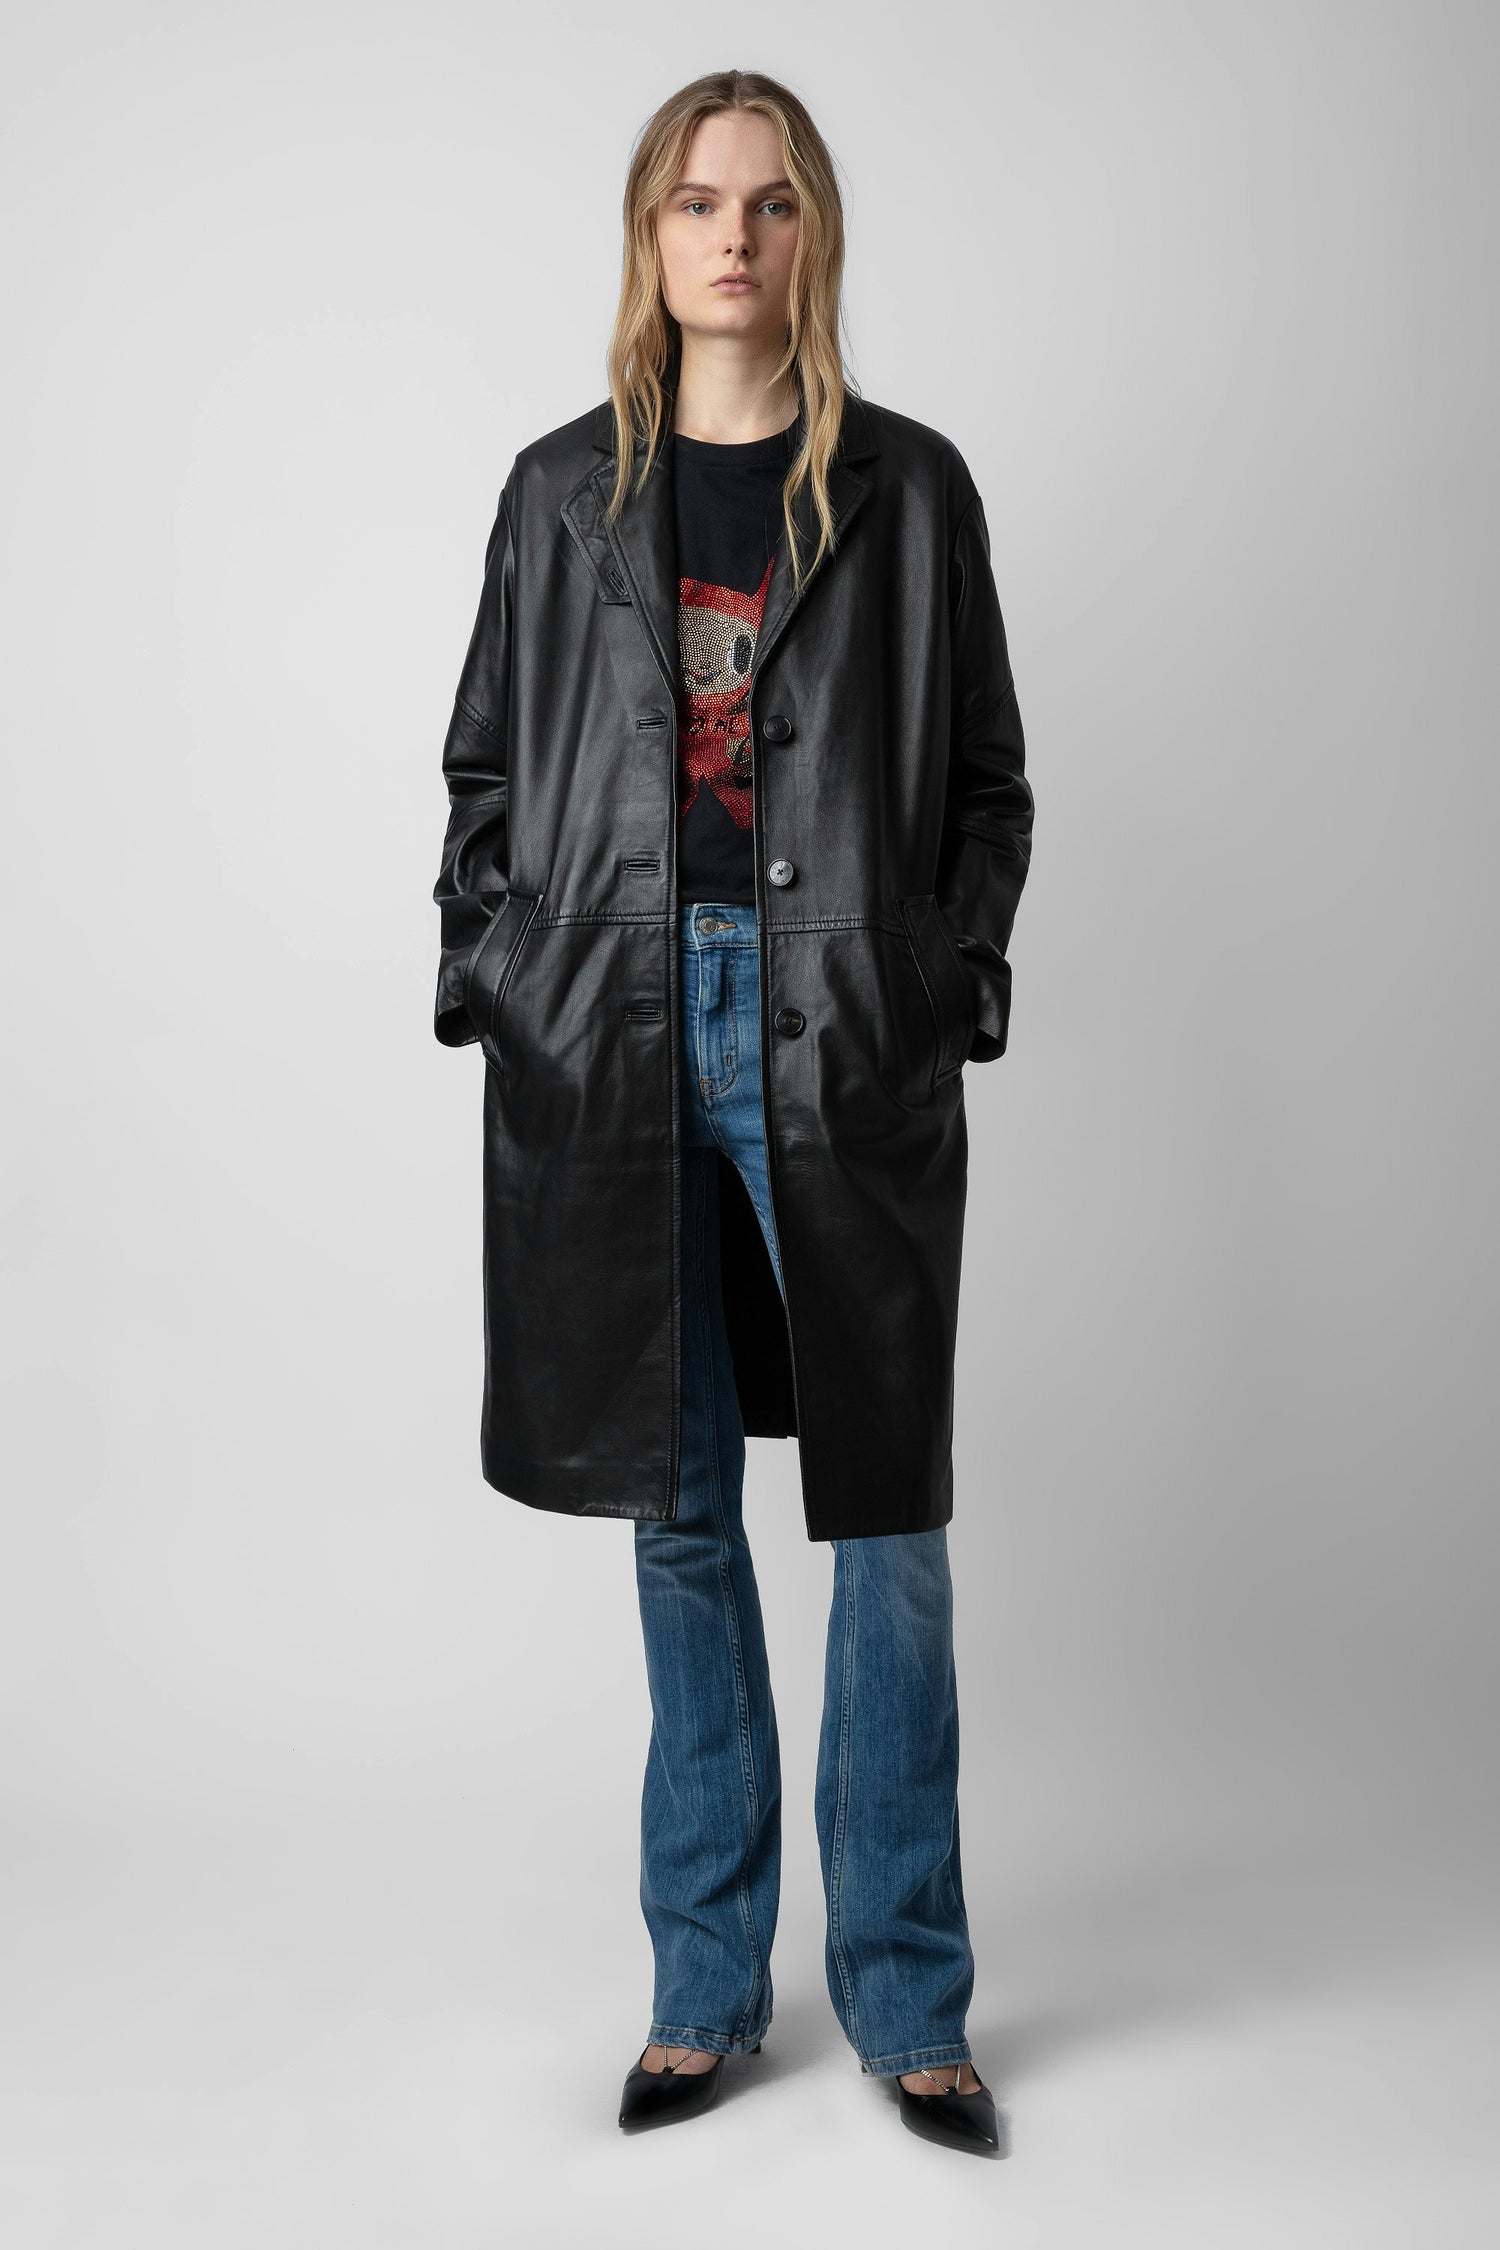 ZADIG & VOLTAIRE: Macari buttoned leather coat, black